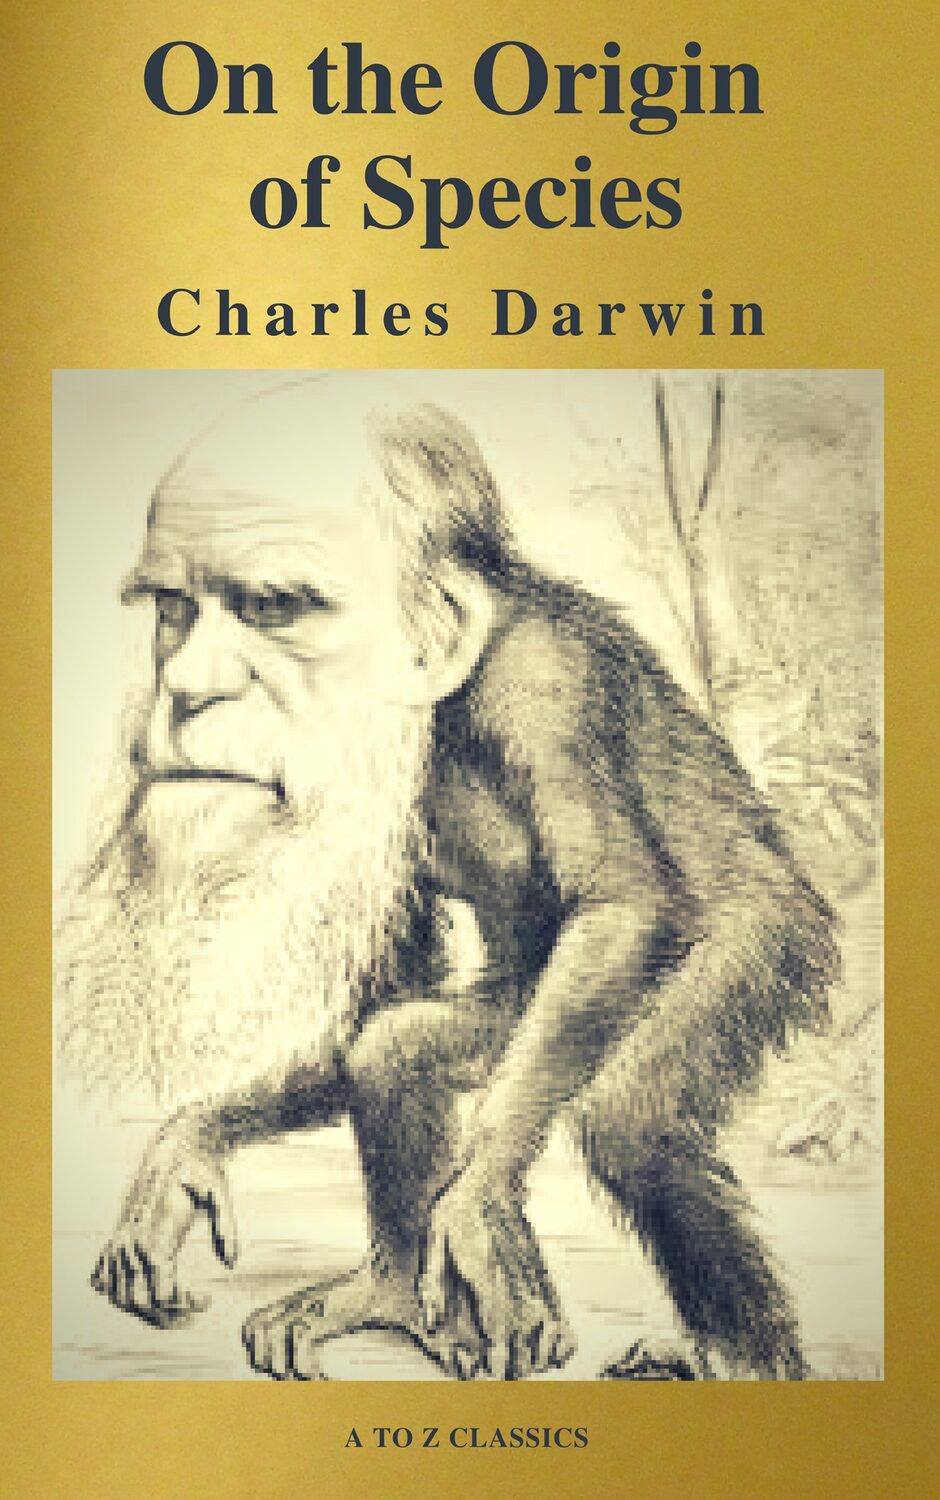 Charles Darwin books 1871